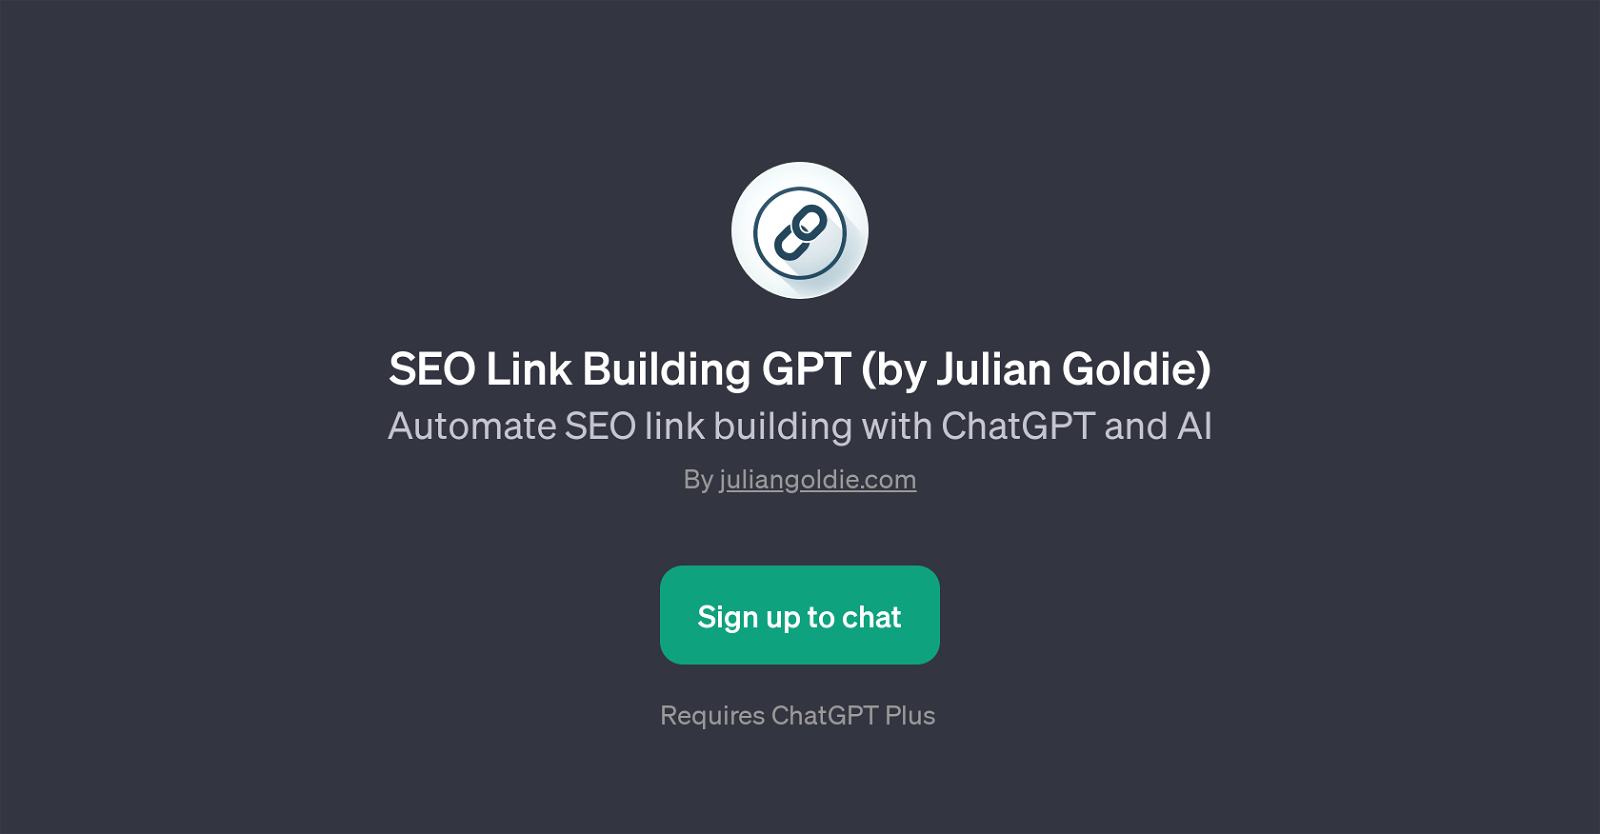 SEO Link Building GPT (by Julian Goldie) website